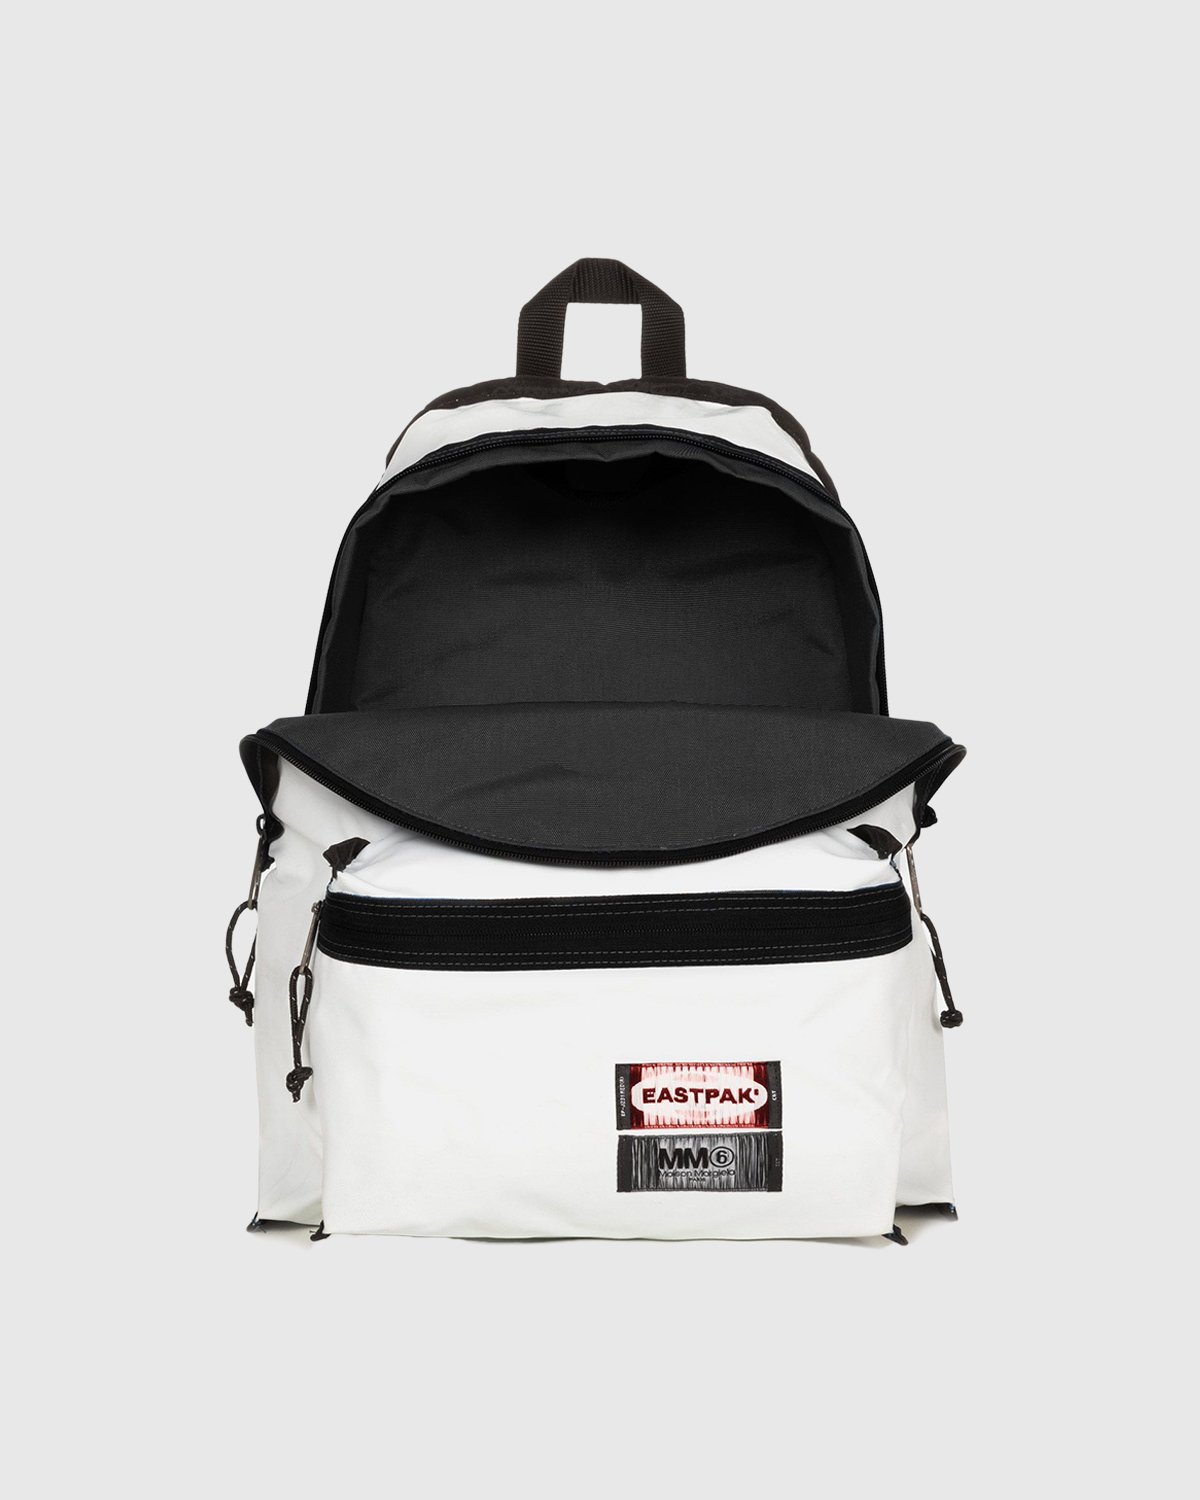 MM6 Maison Margiela x Eastpak - Padded Backpack Black - Accessories - Black - Image 5